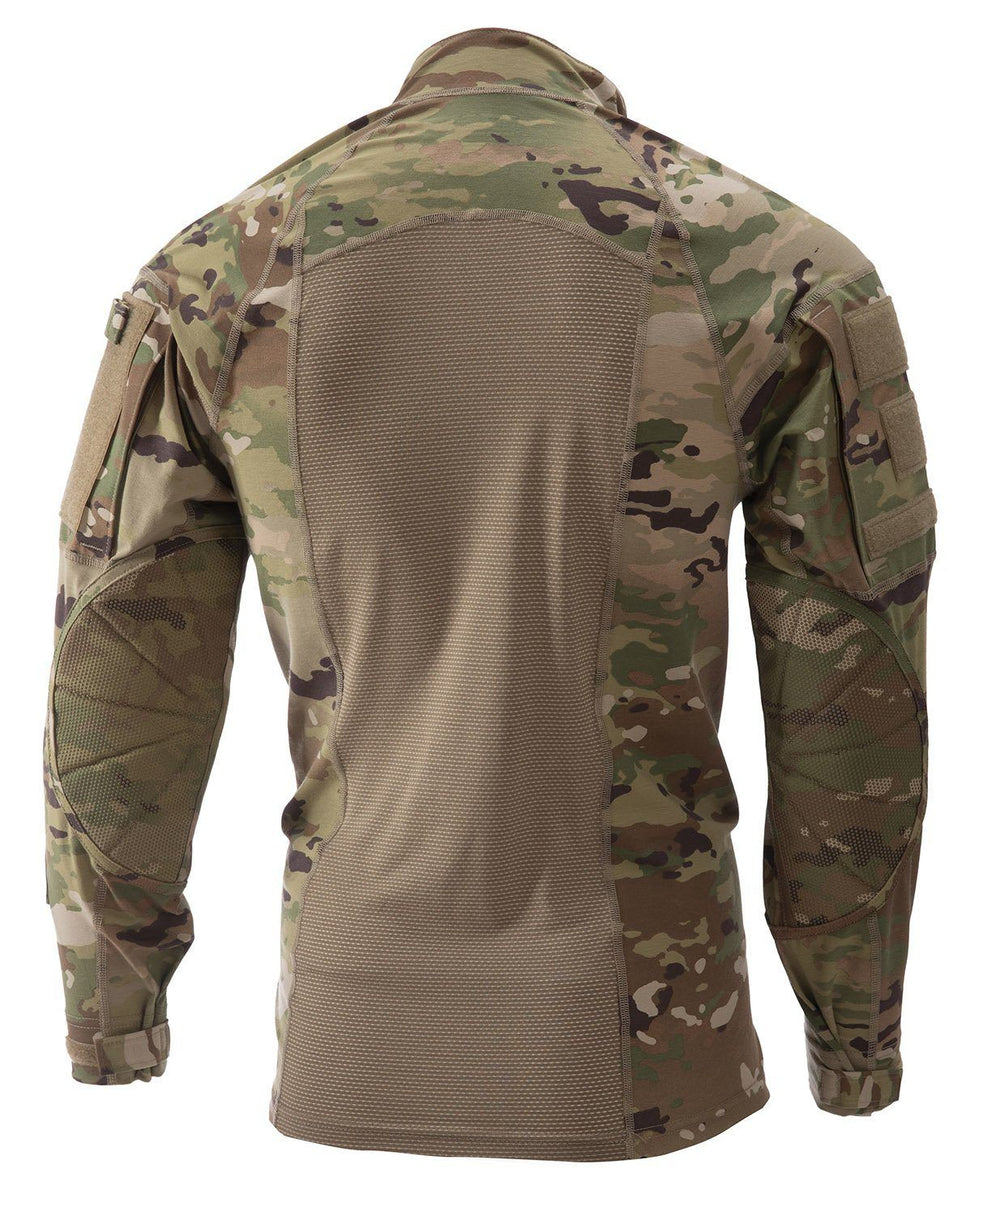 Apparel - Tops - Combat - USGI Massif ACS Type II FR Army Combat Shirt - OCP (SURPLUS)